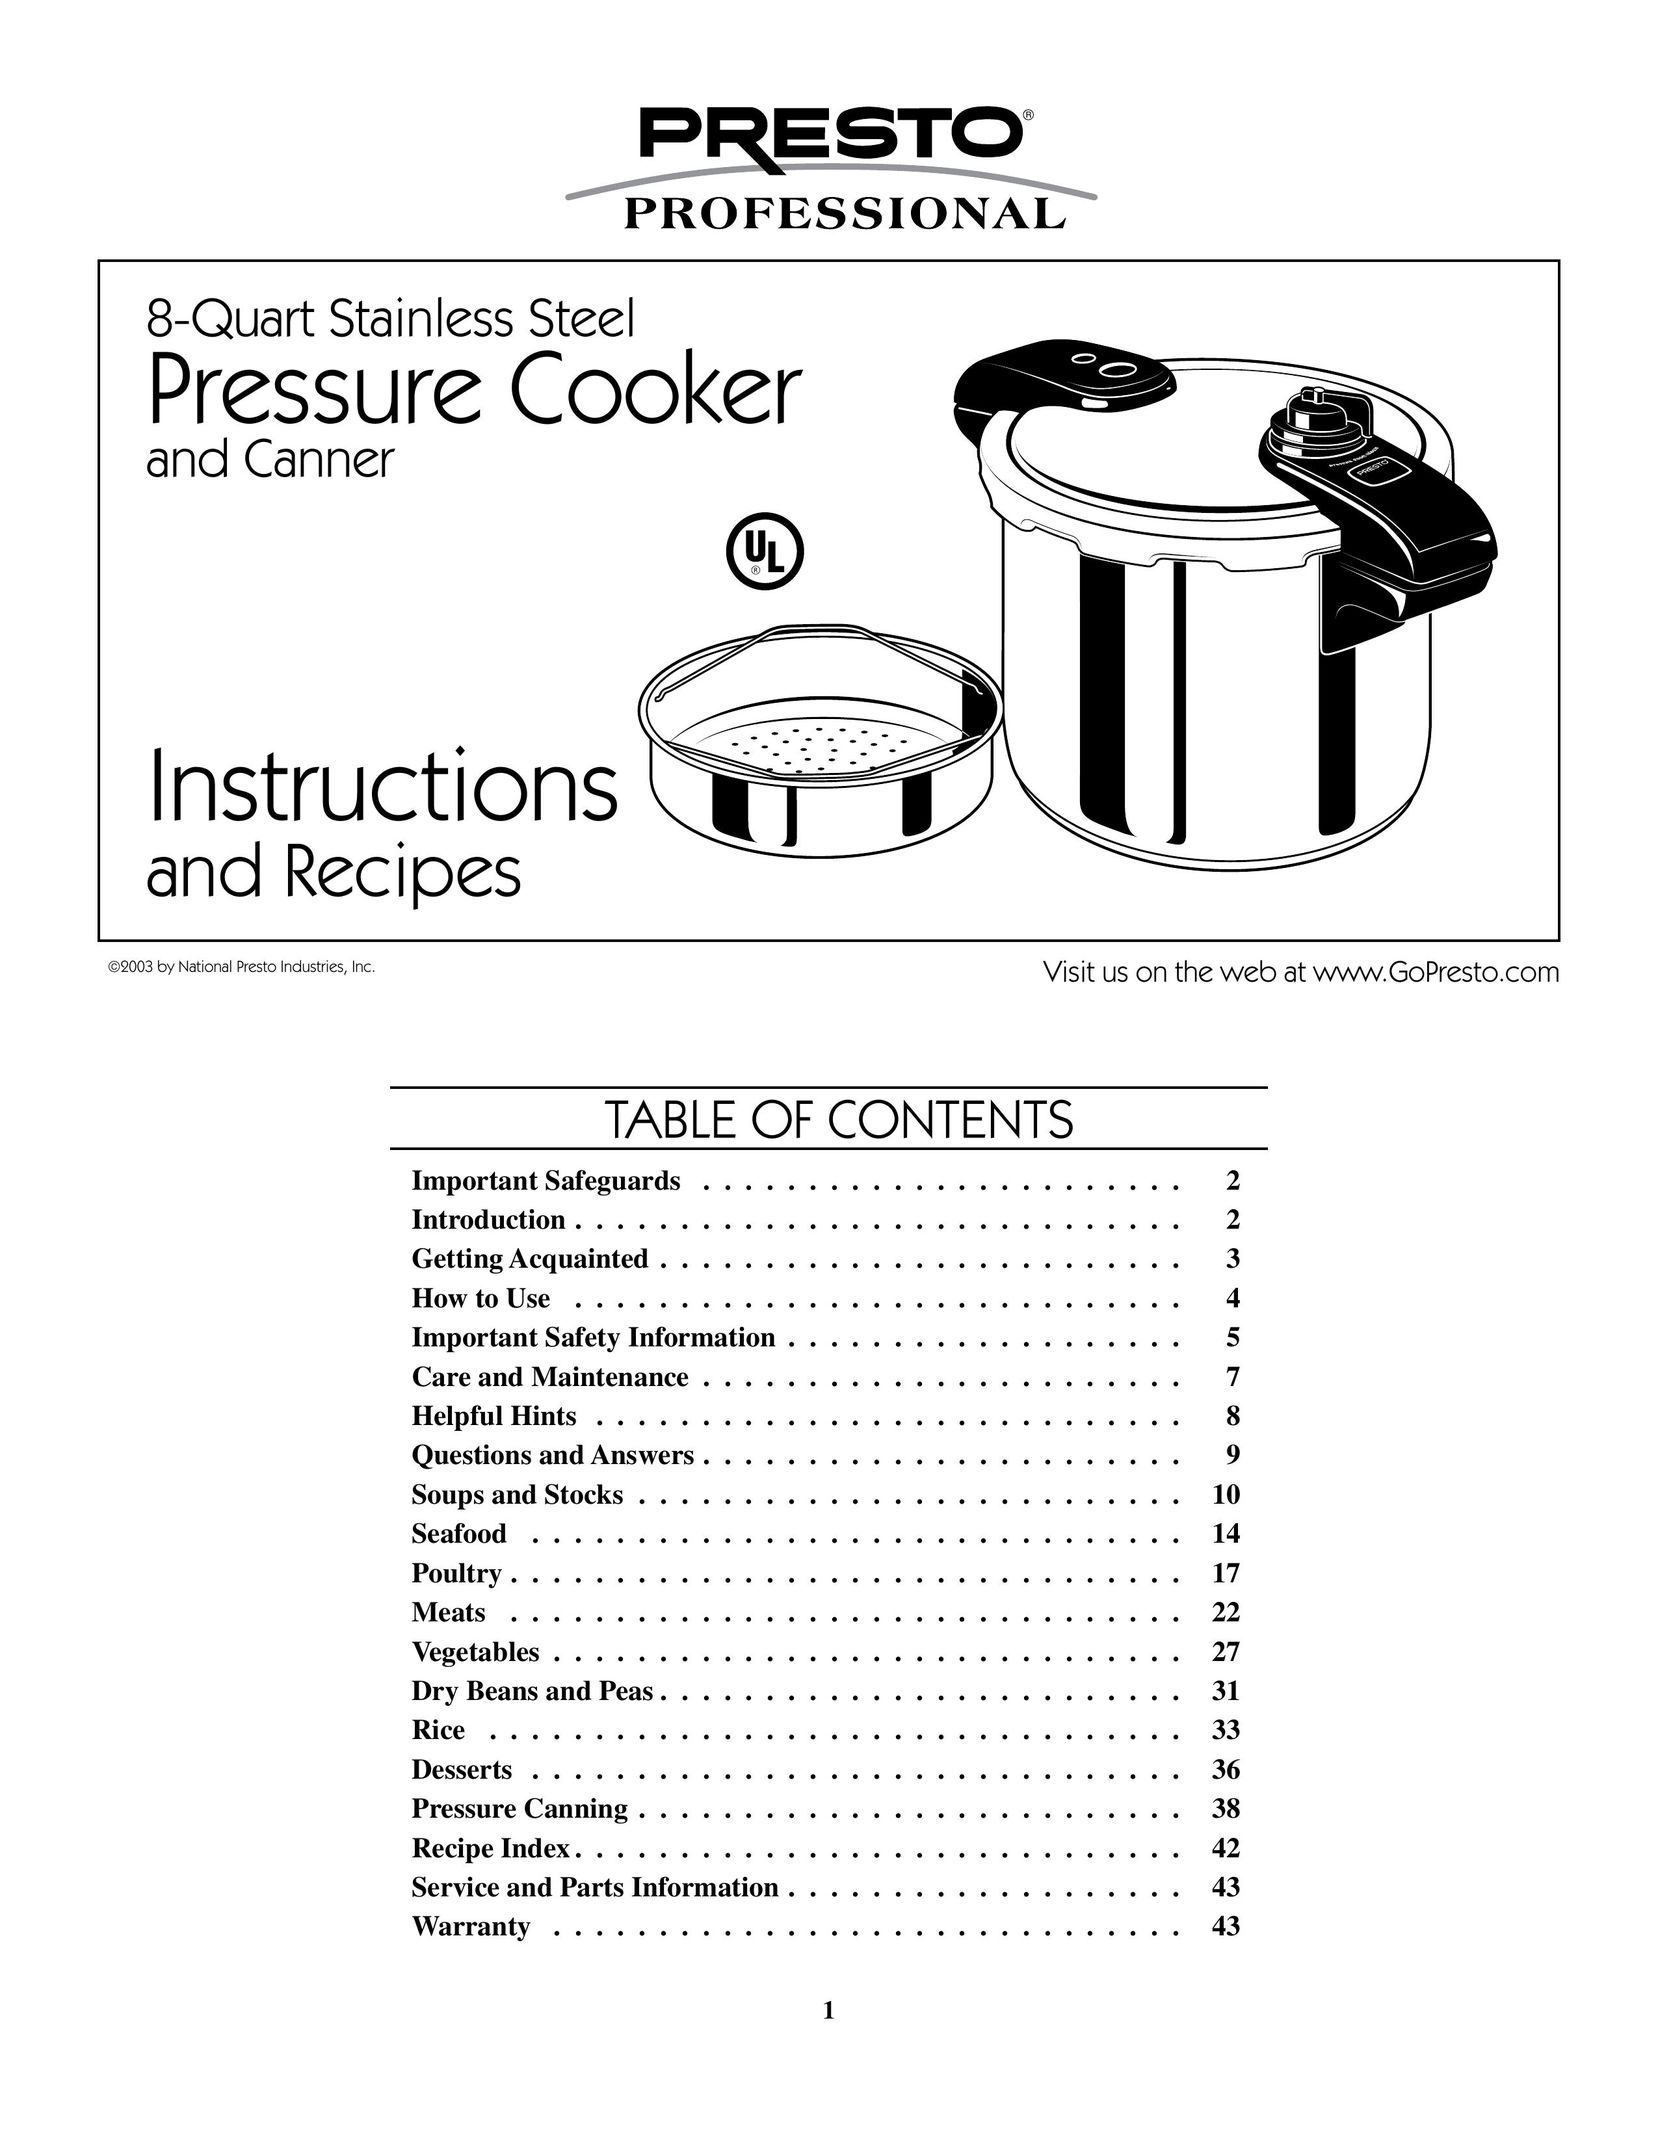 Presto 8-Quart Stainless Steel Pressure Cooker Electric Pressure Cooker User Manual